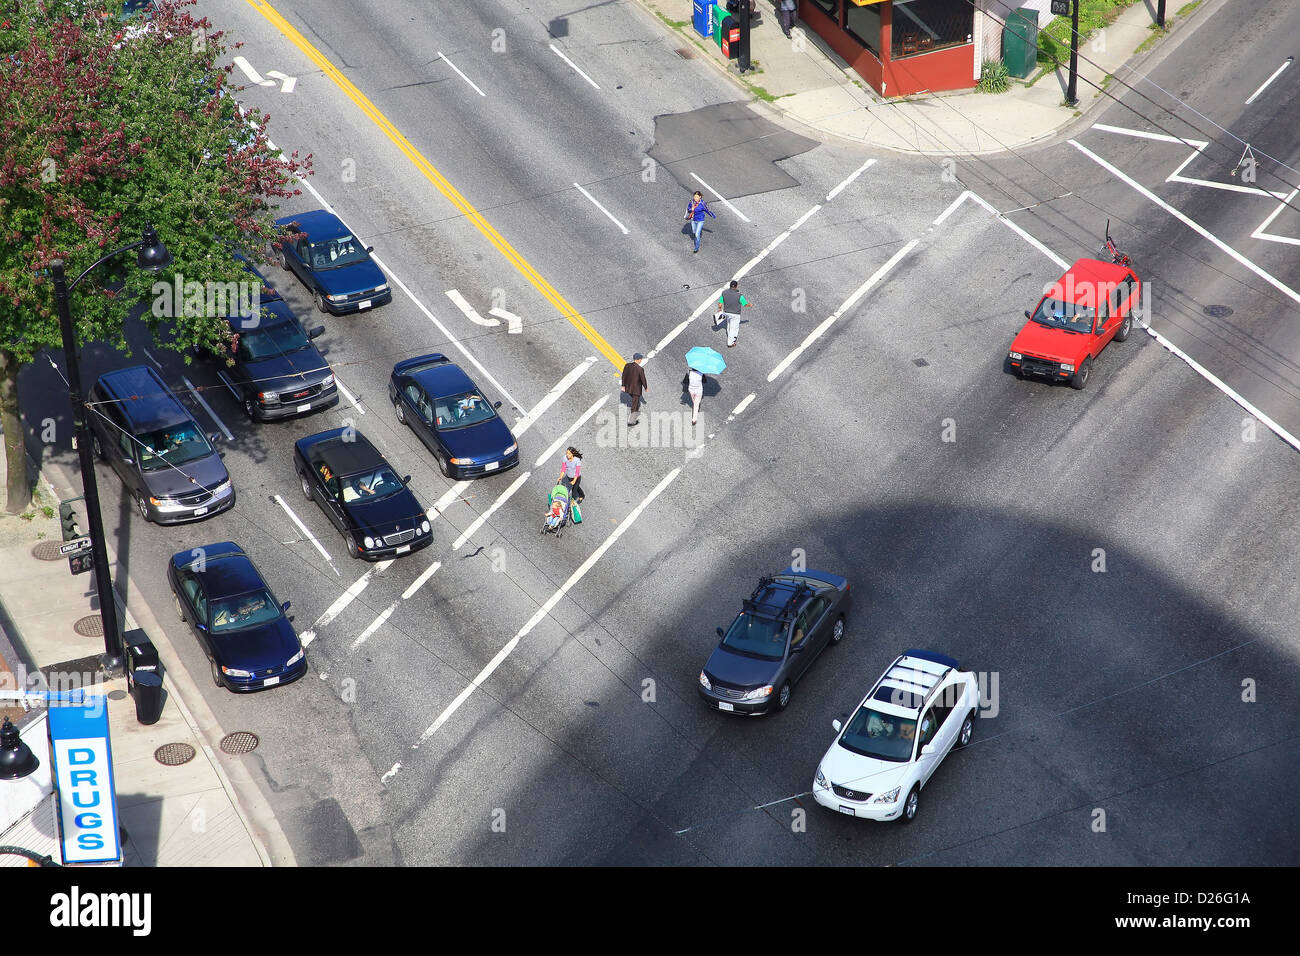 Pedestrians cross busy city street Stock Photo